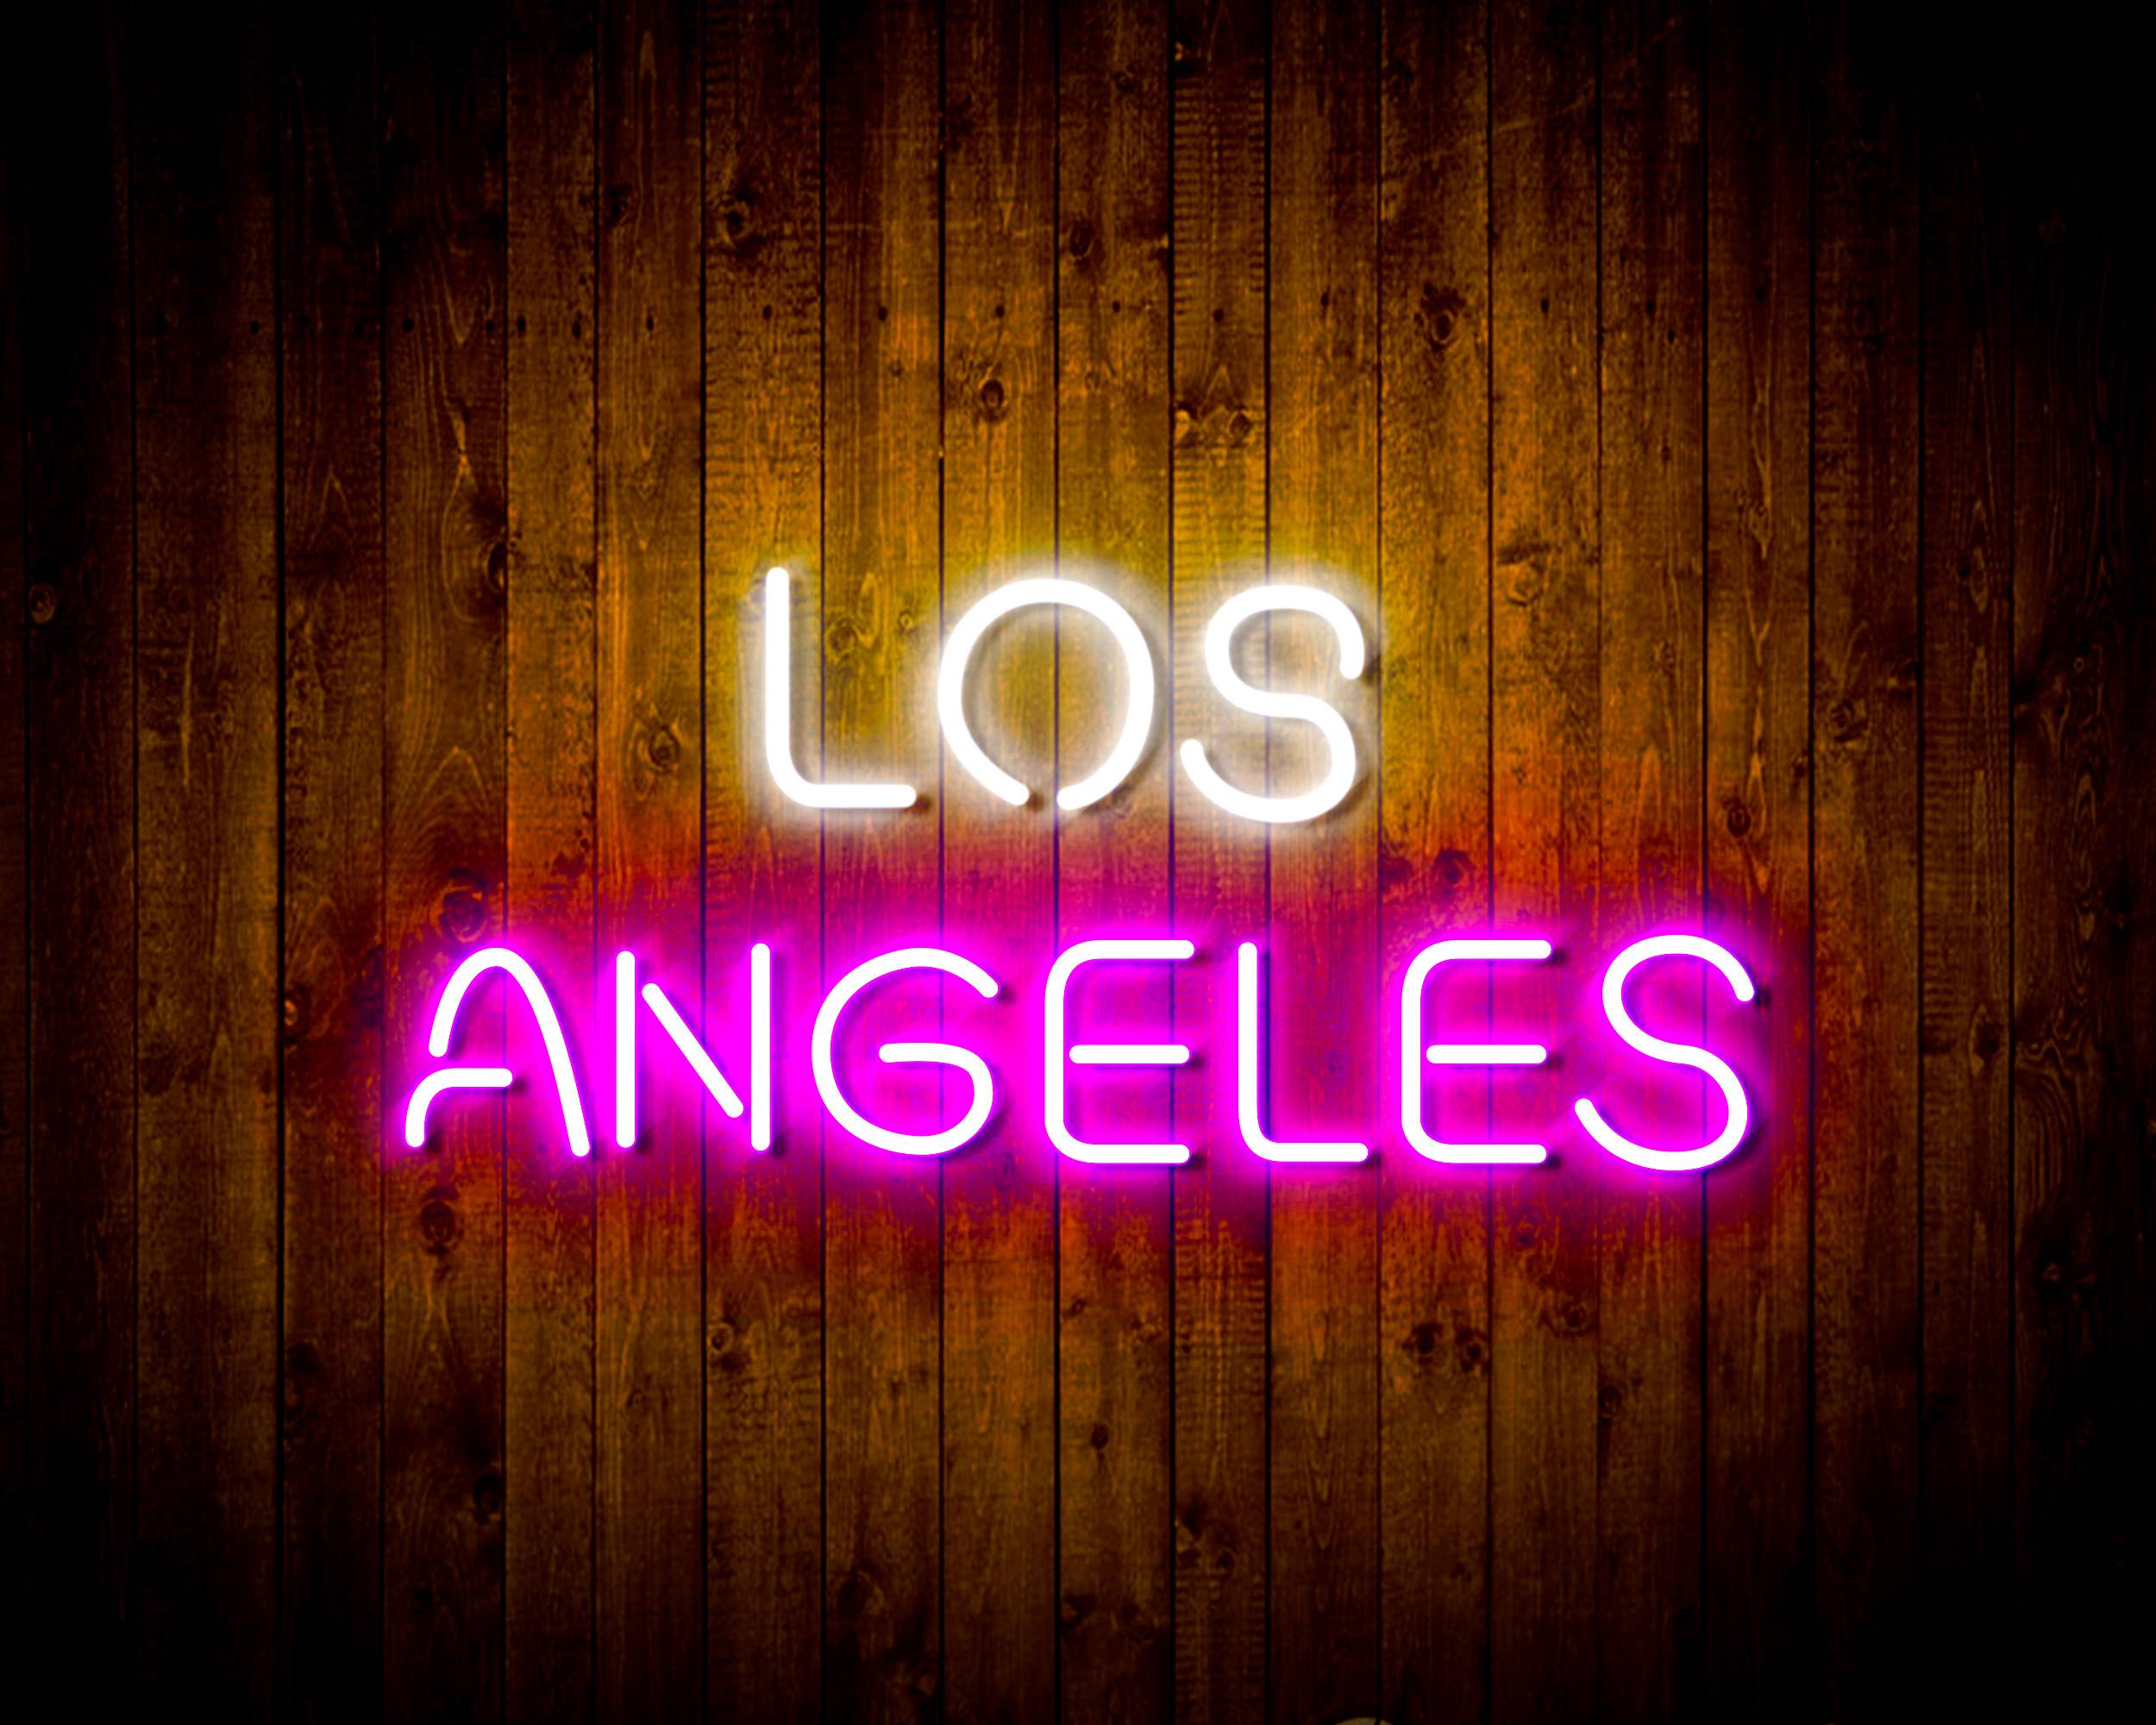 NHL Los Angeles Kings Bar Neon Flex LED Sign